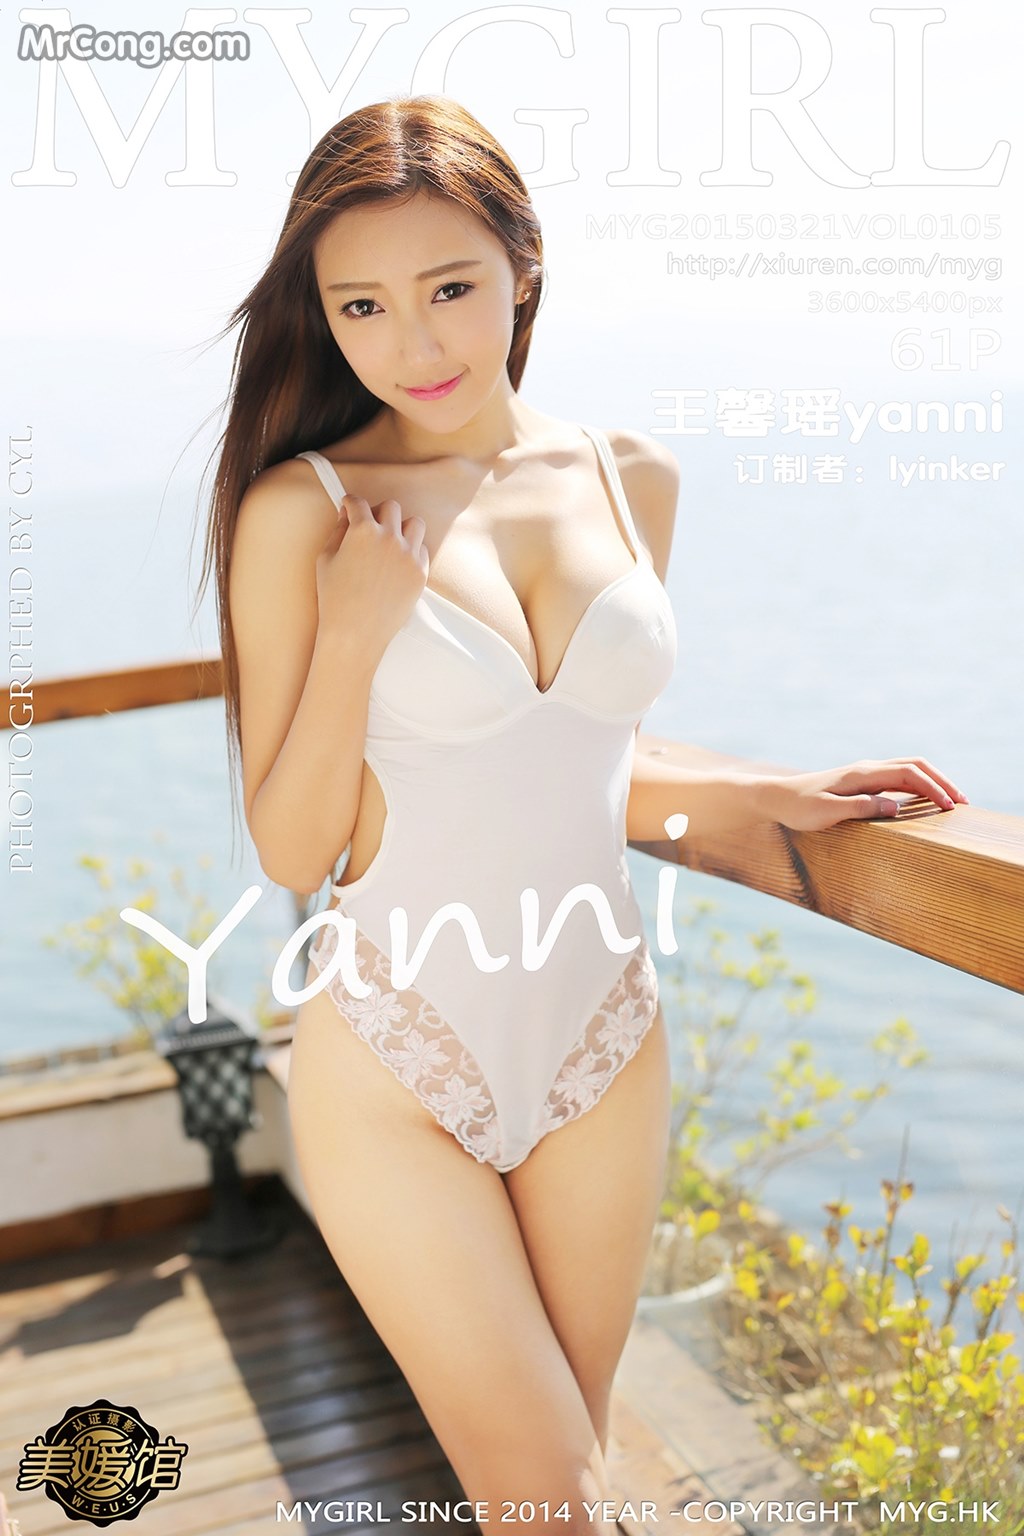 MyGirl Vol.105: Model Yanni (王馨瑶) (62 pictures) photo 1-0